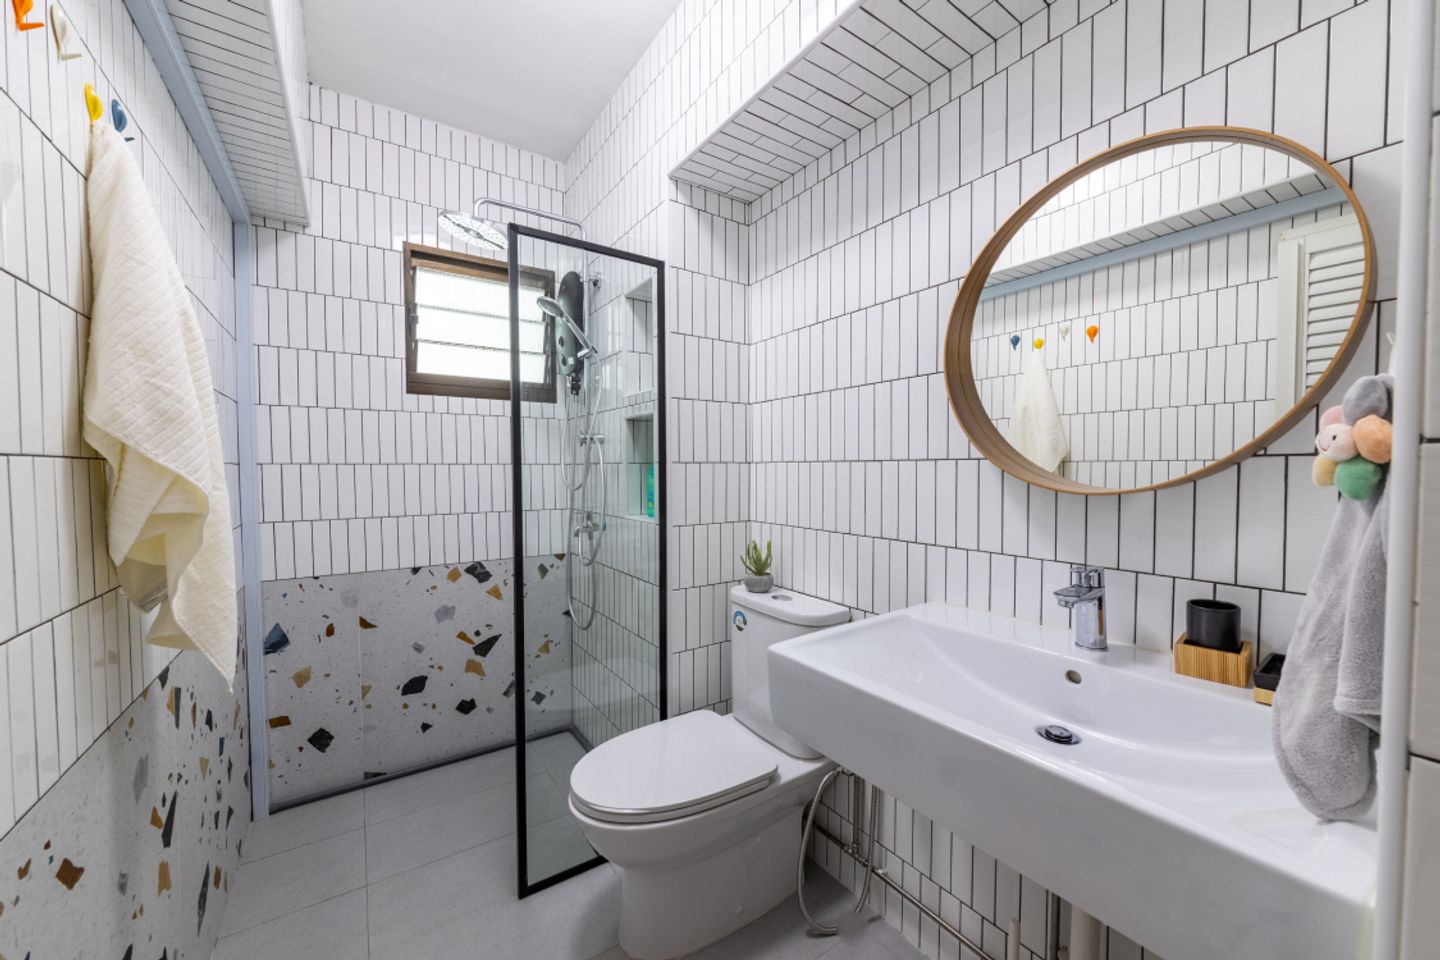 Bathroom Design With A Scandinavian Aesthetic - Livspace